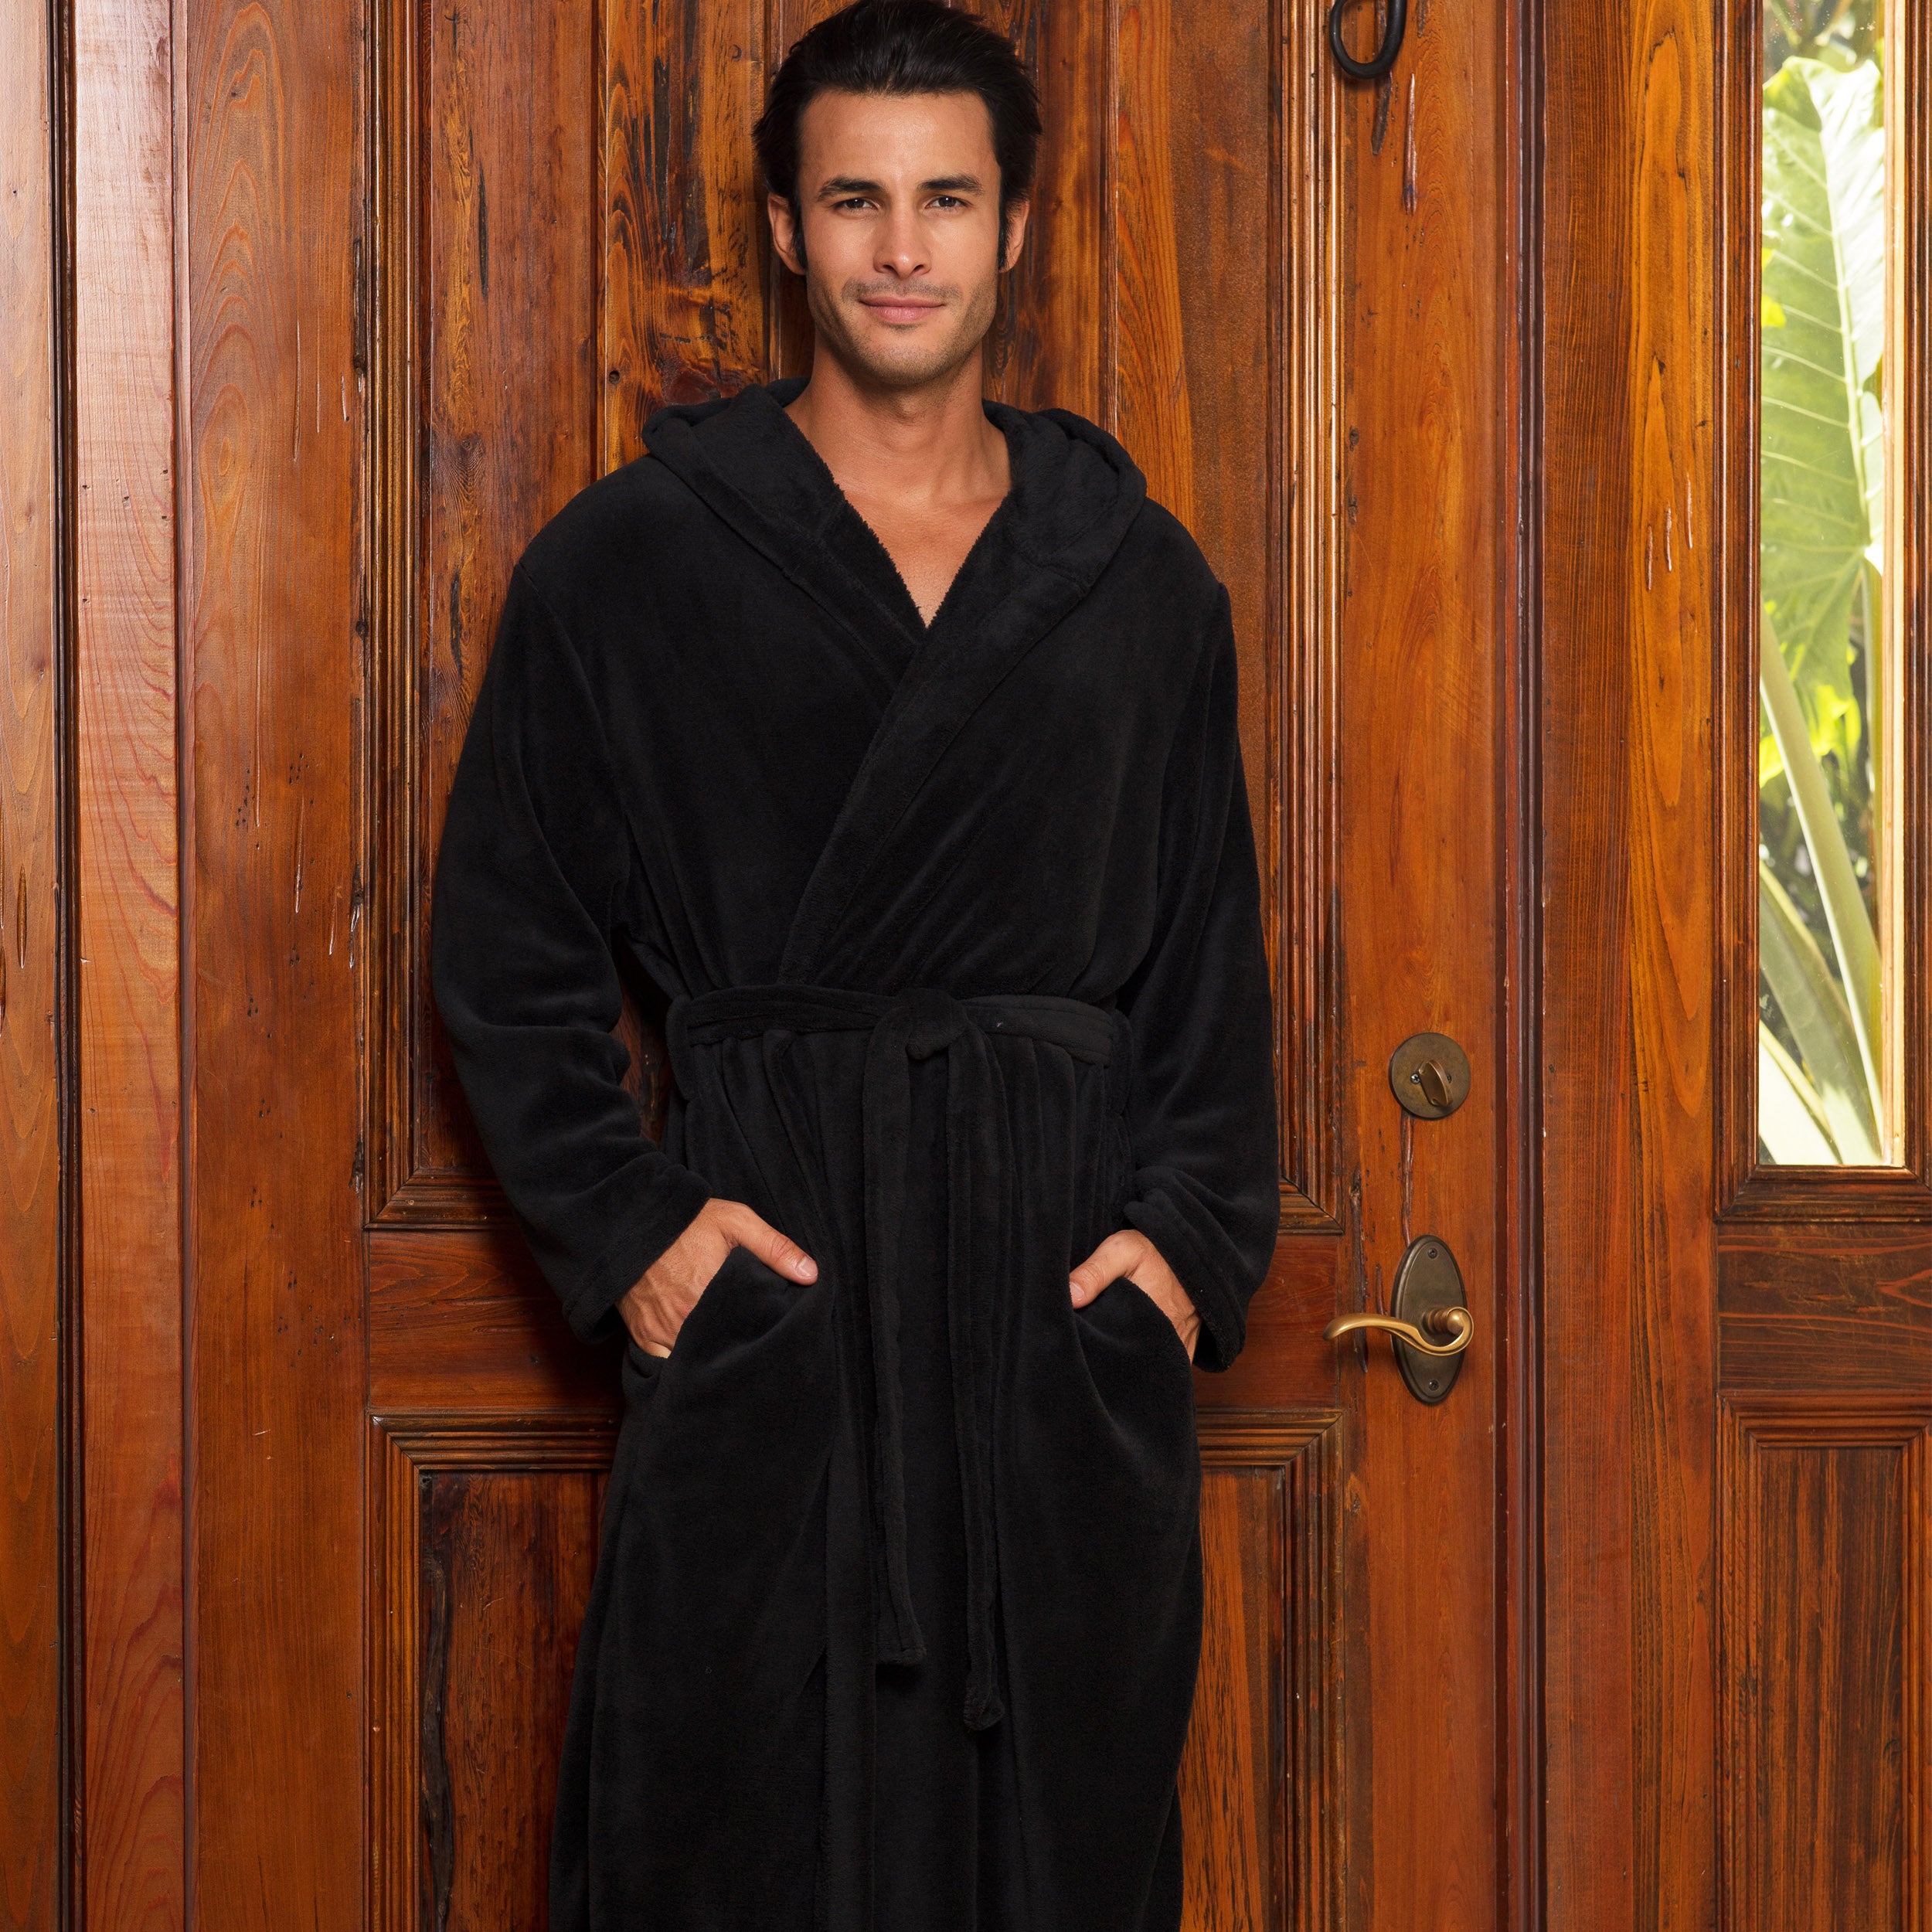 David Archy Hooded Robe Coral Fleece Soft Dressing Gown Mens Bathrobe Warm  Winter